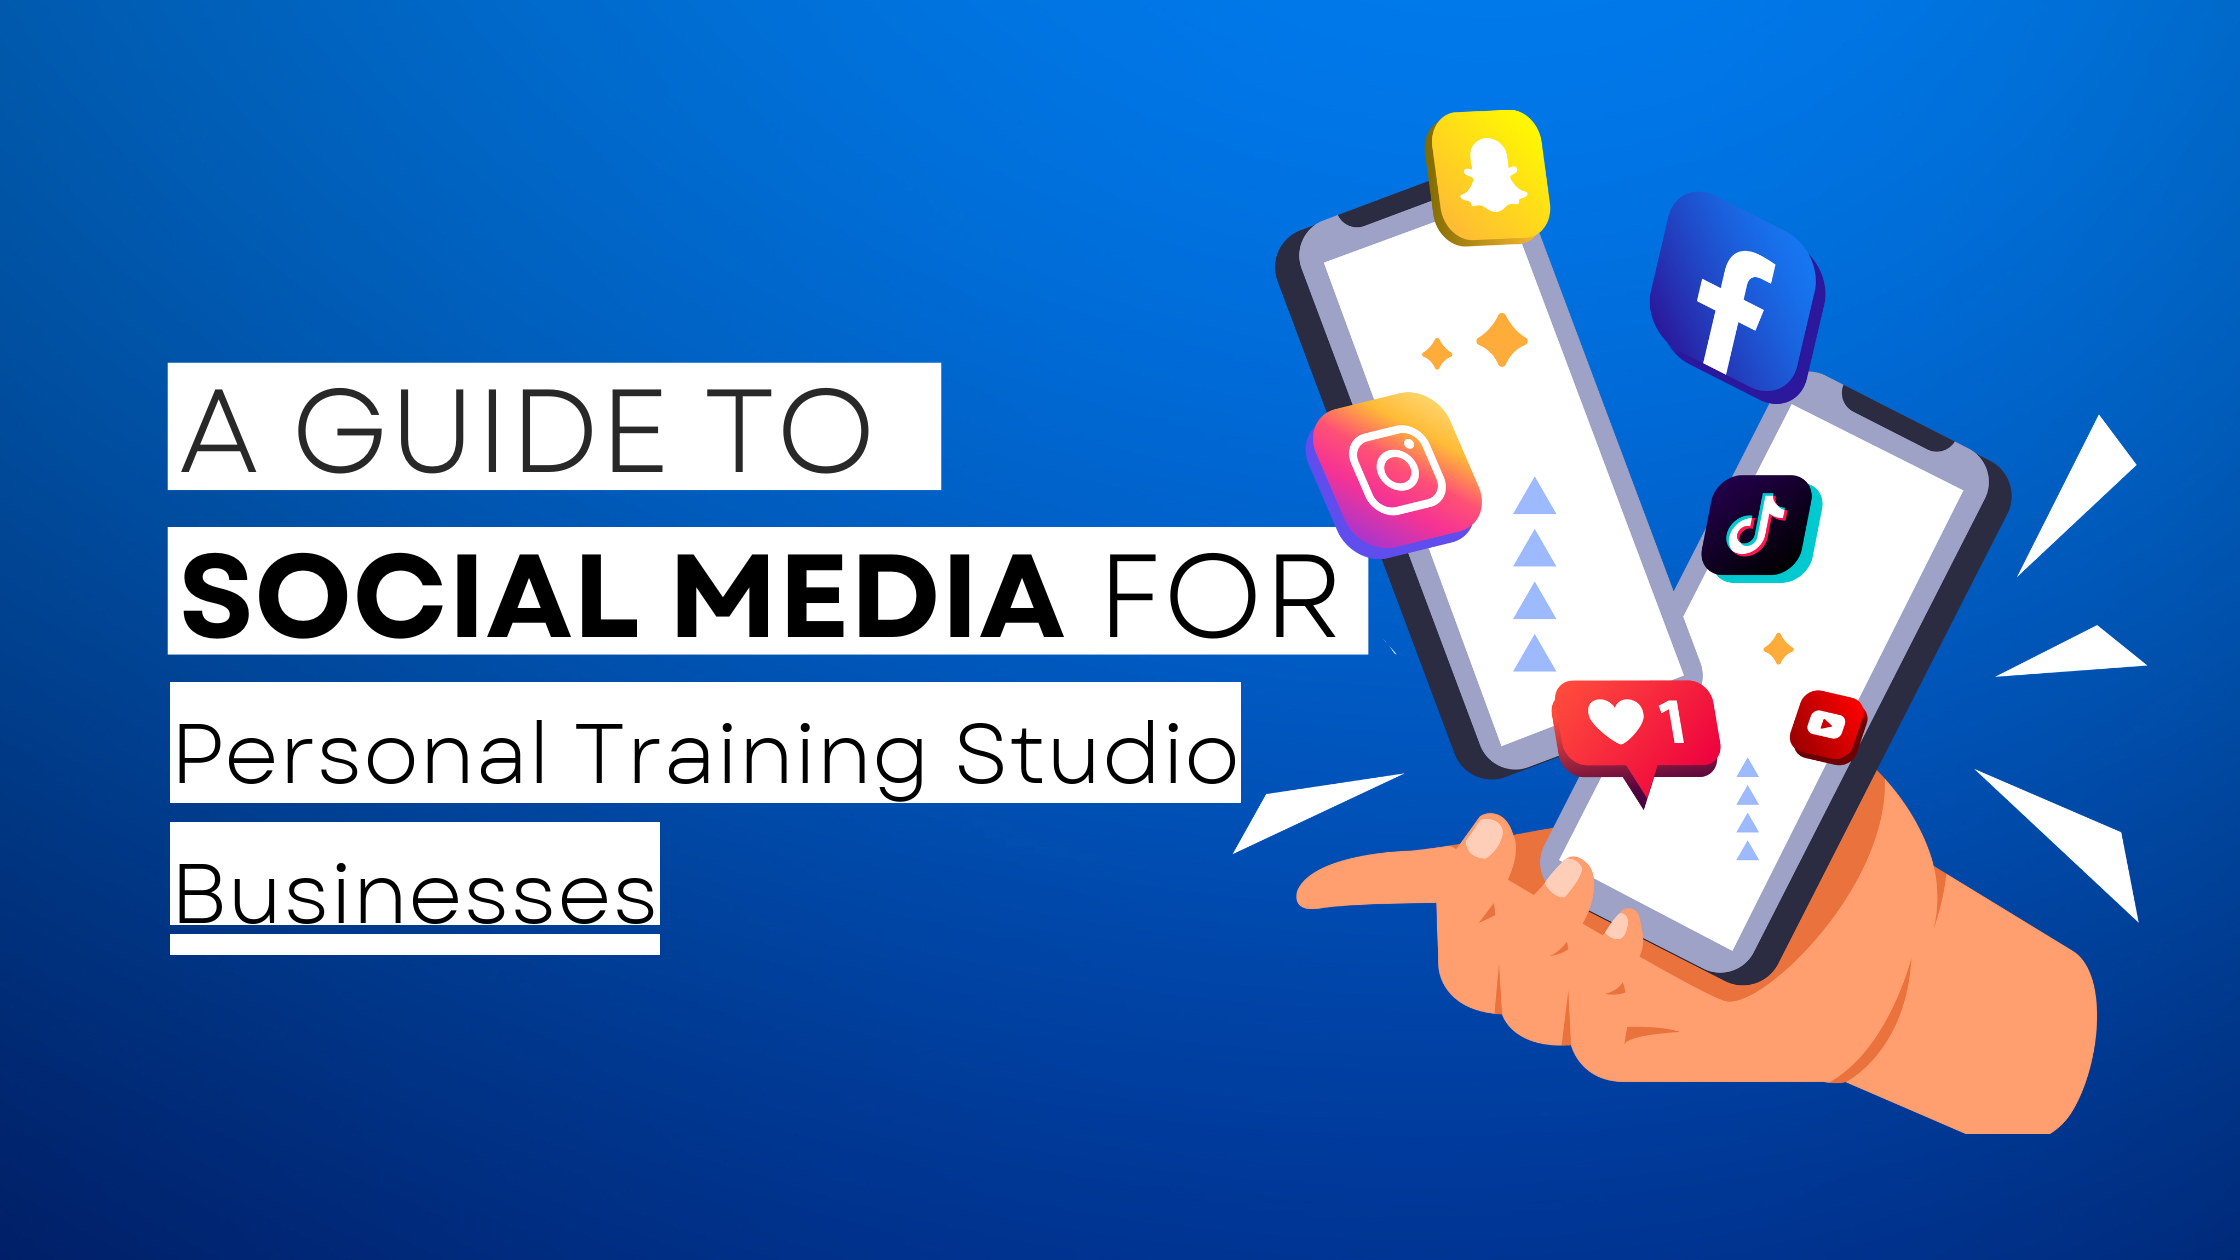 How to start Personal Training Studio on social media